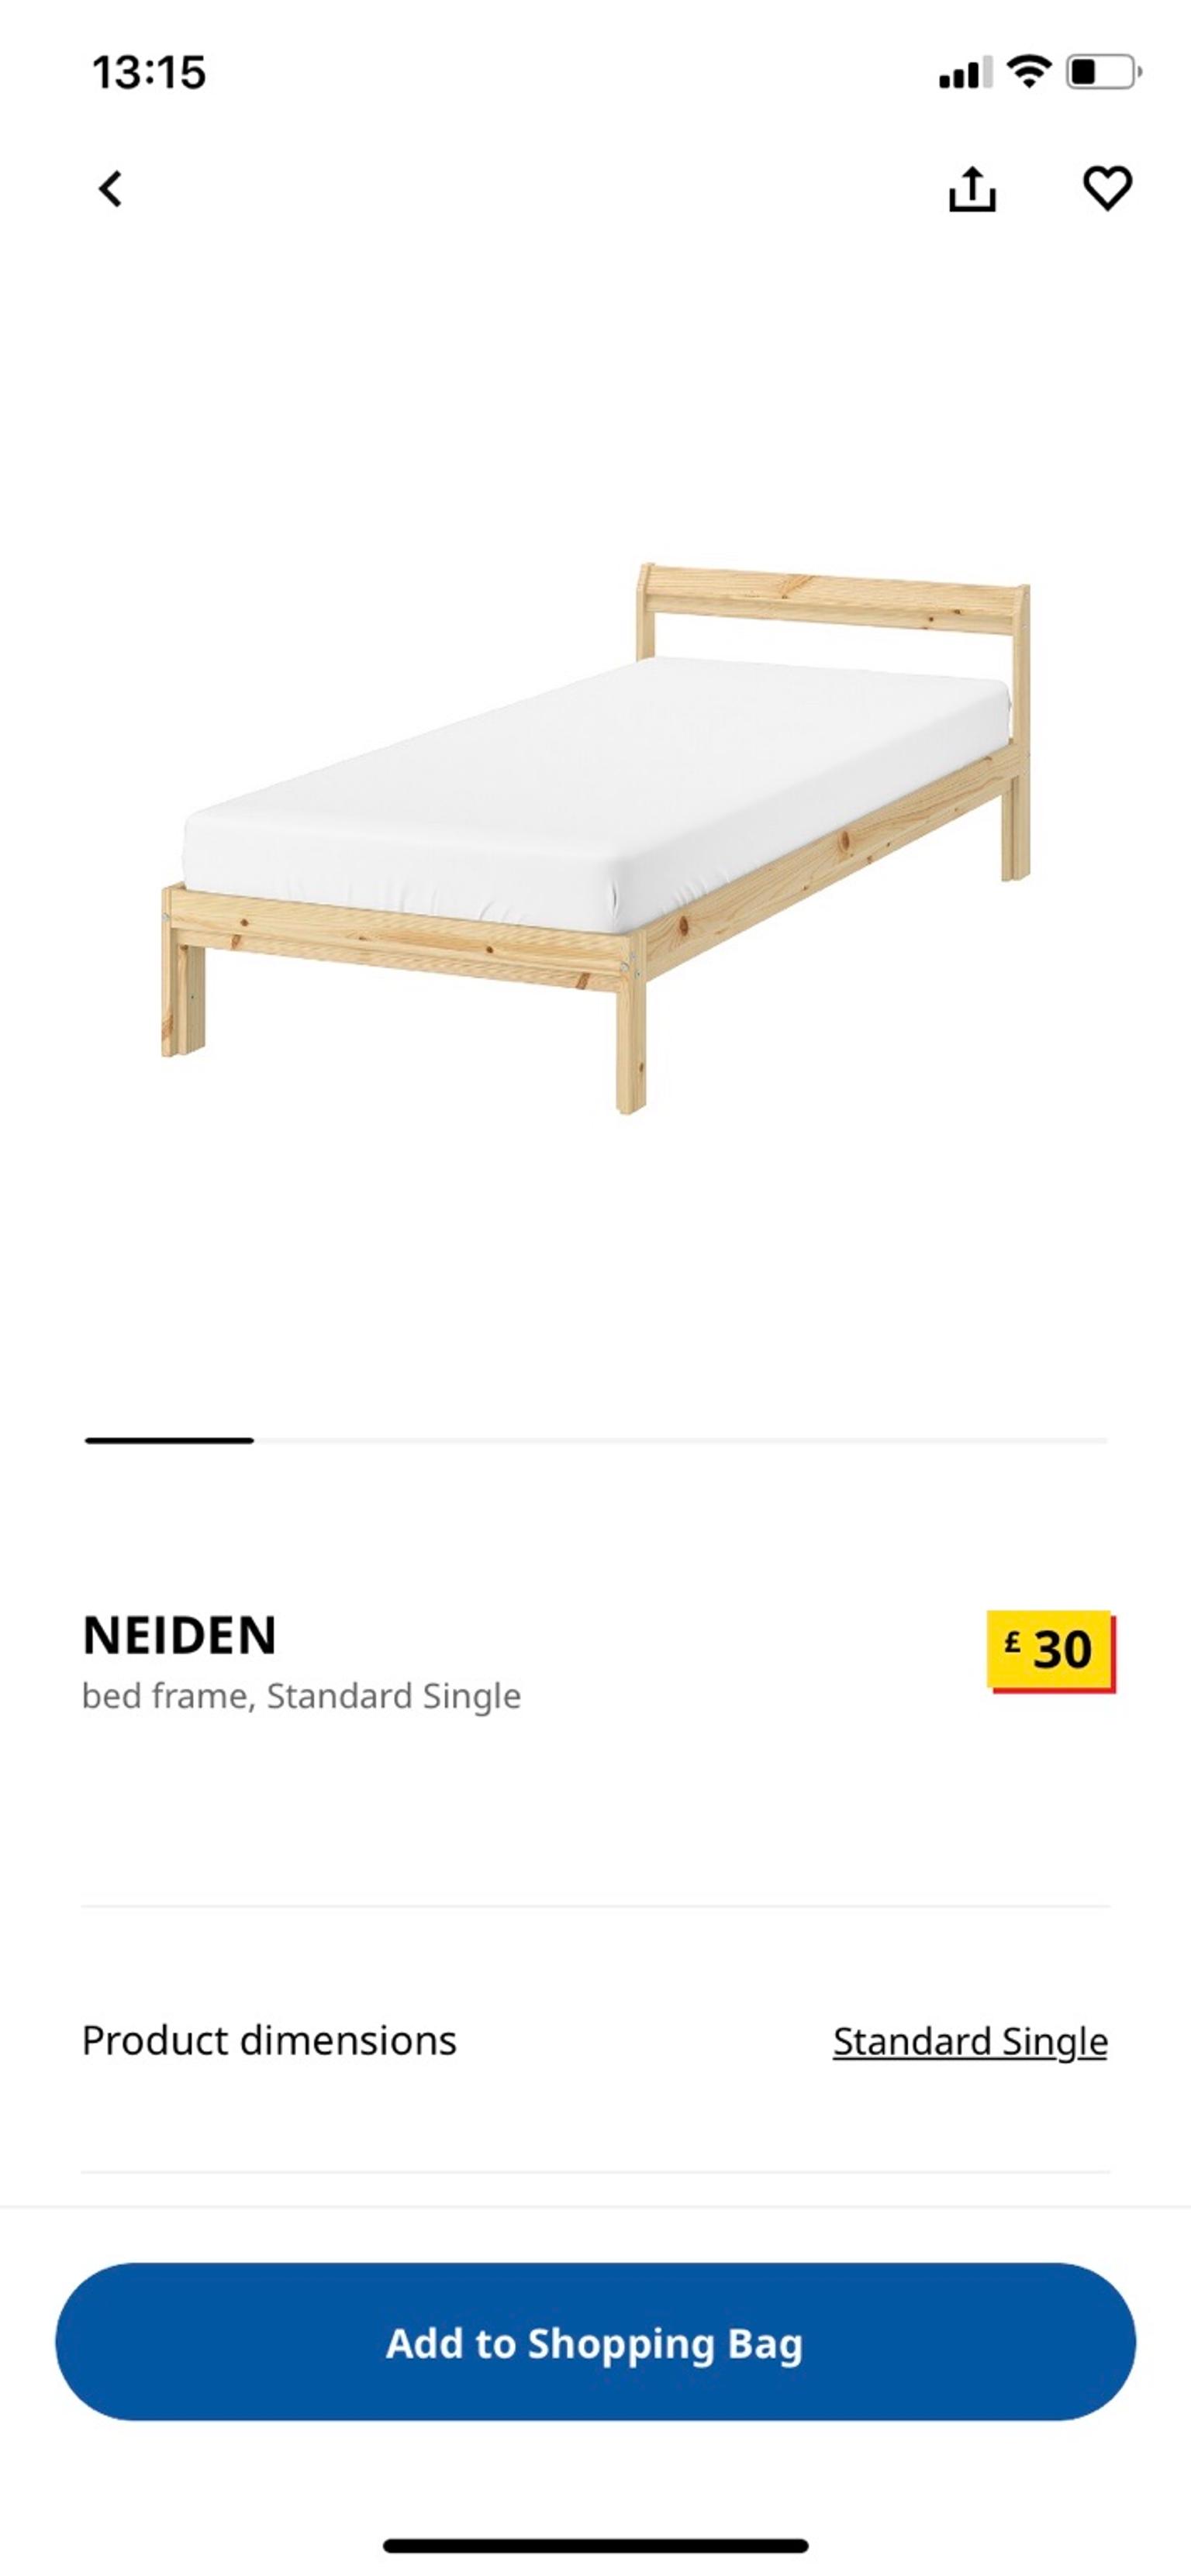 Ikea Neiden Single Bed With LurÖy Slats, What Size Is A Standard Single Bed Frame